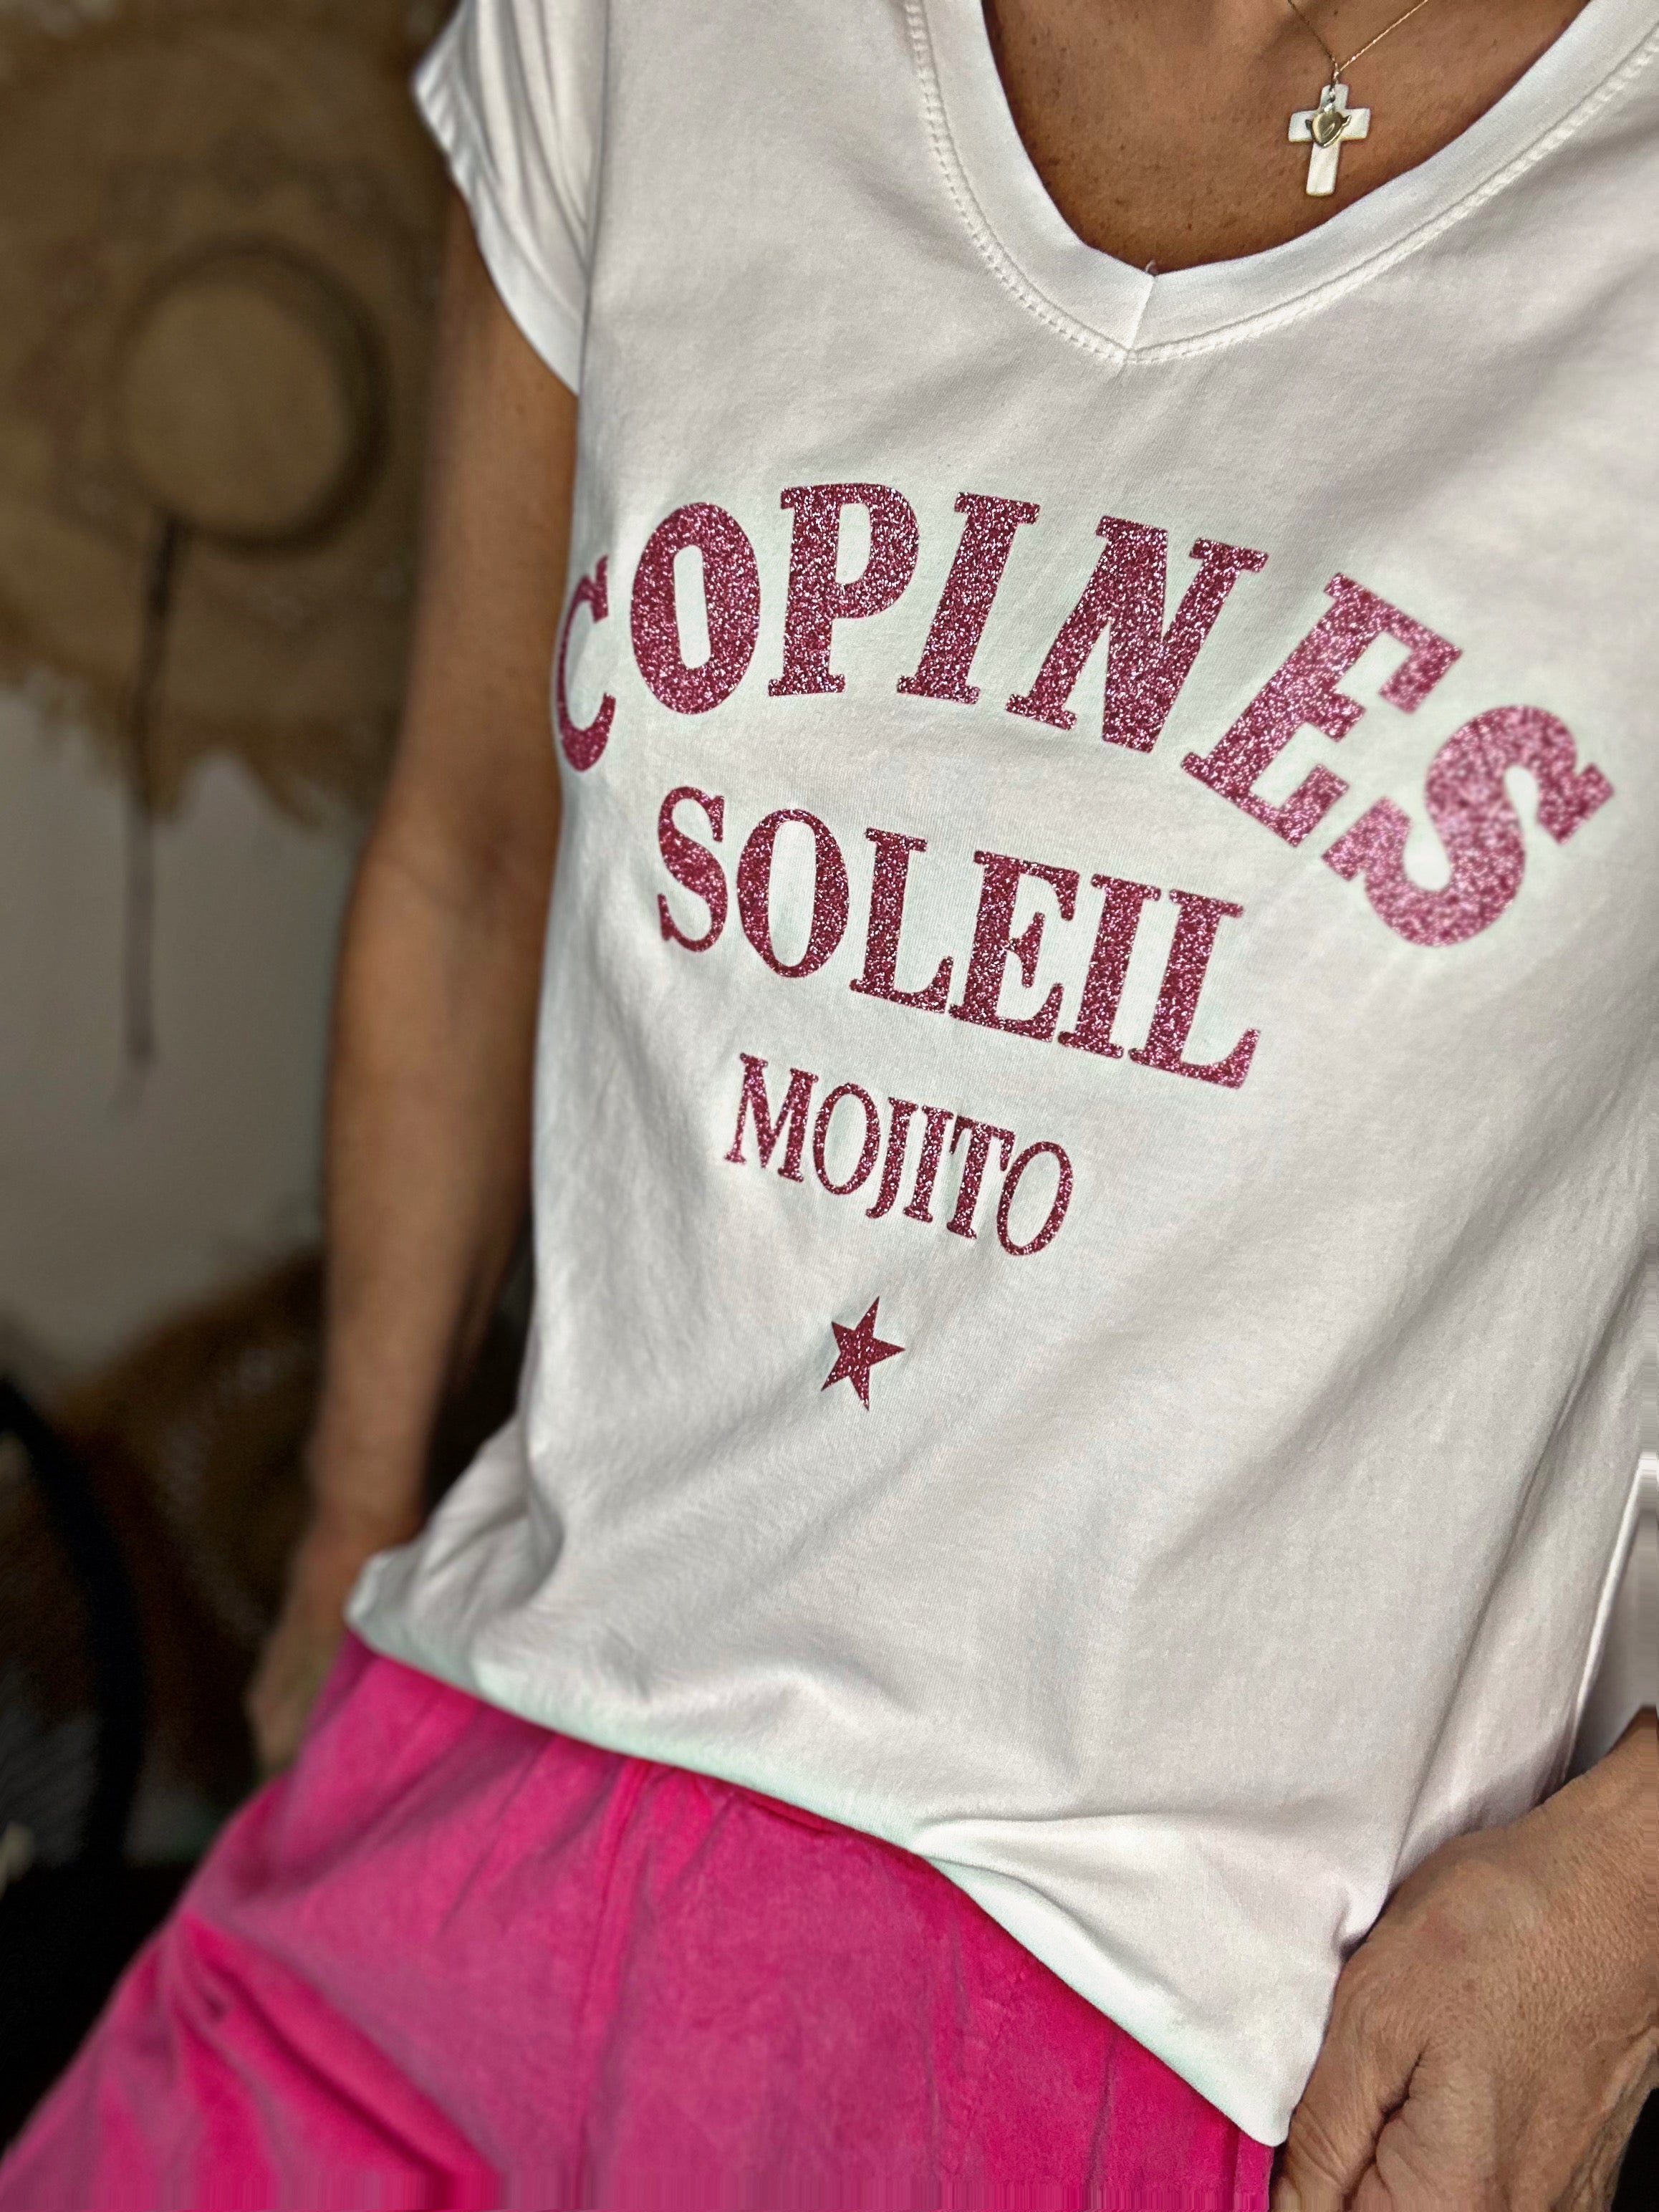 Tee shirt " Copines Soleil Mojito " Rose